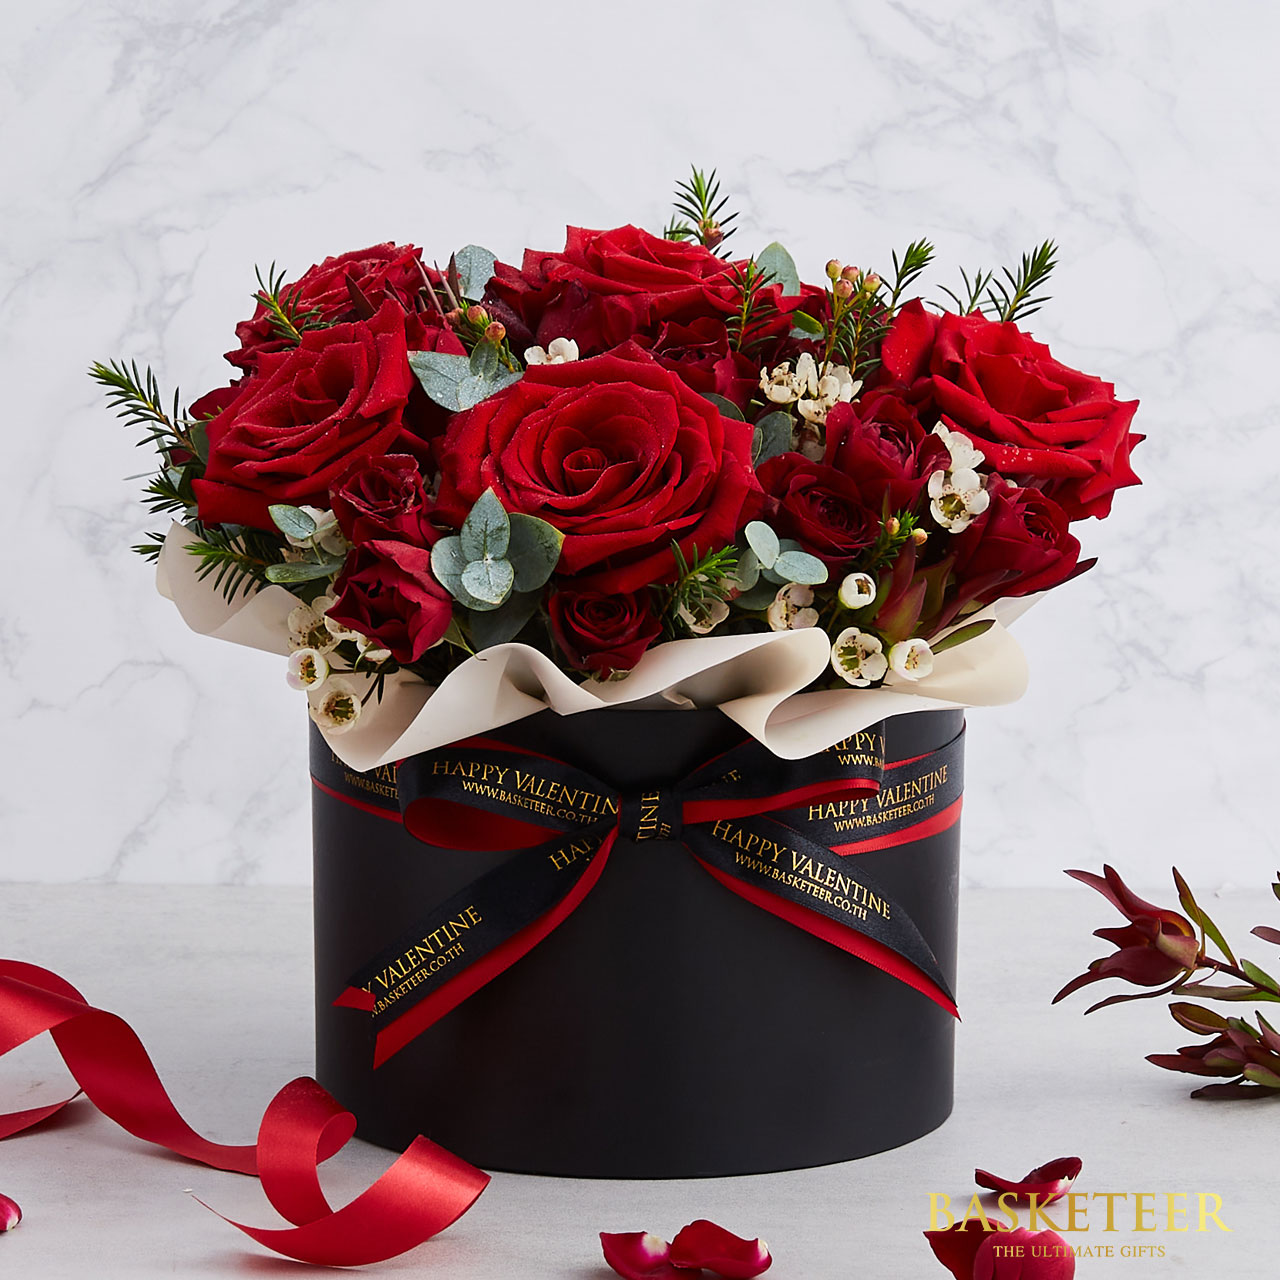 The Glamorous Red Rose Box